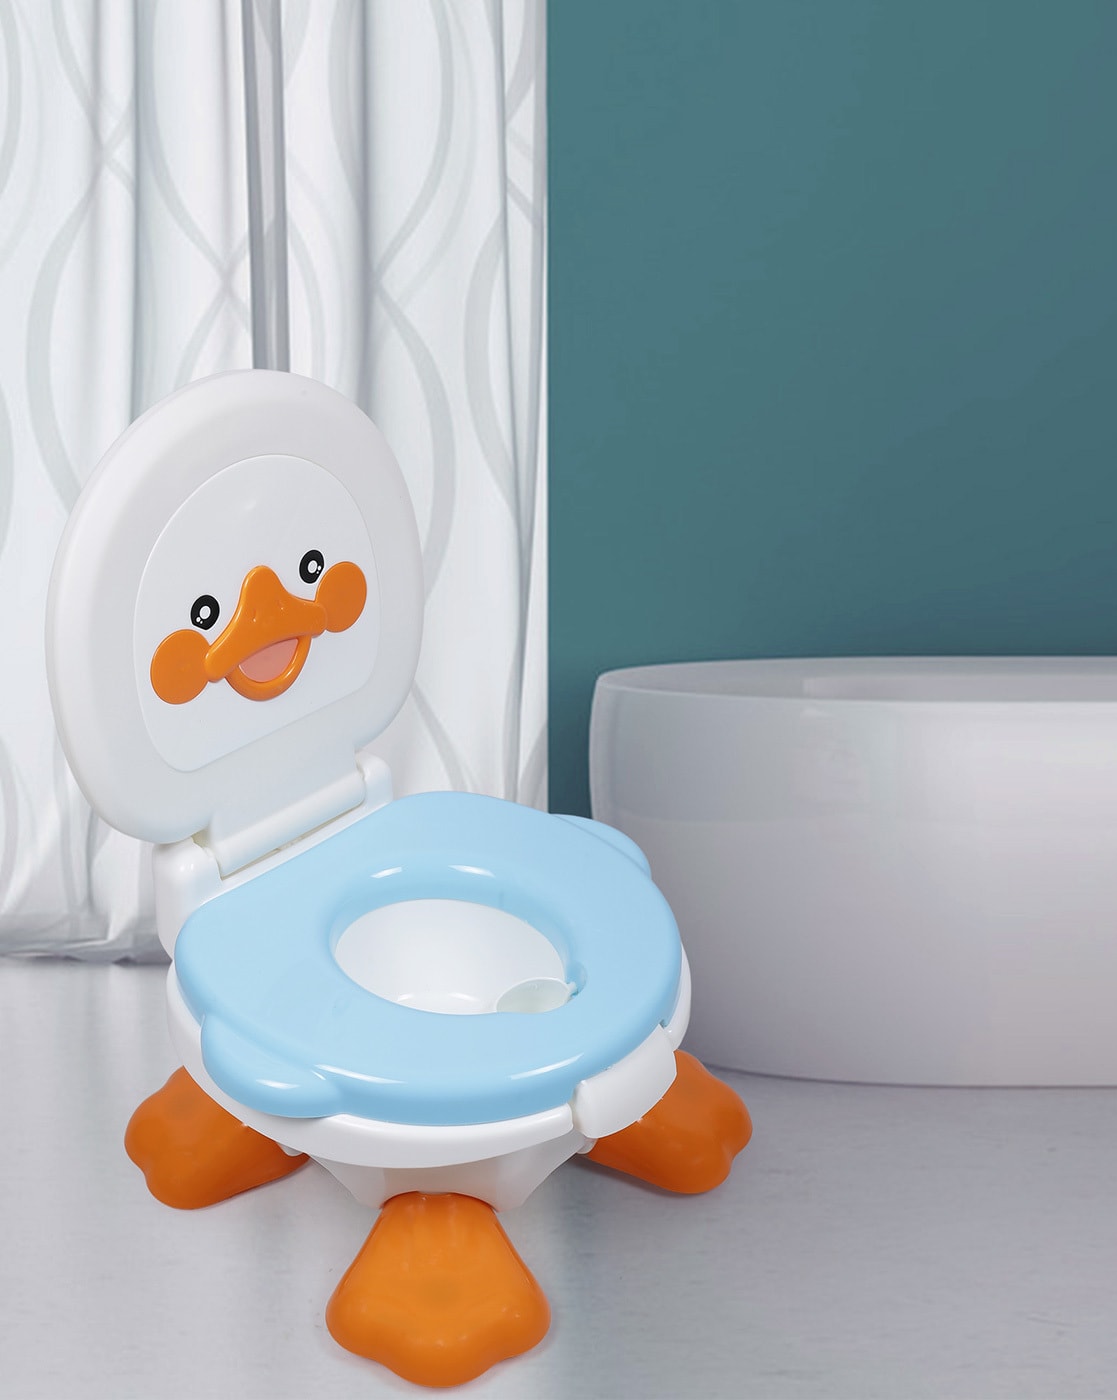 baby toilet seat flipkart Potty seat duck style baby csm training